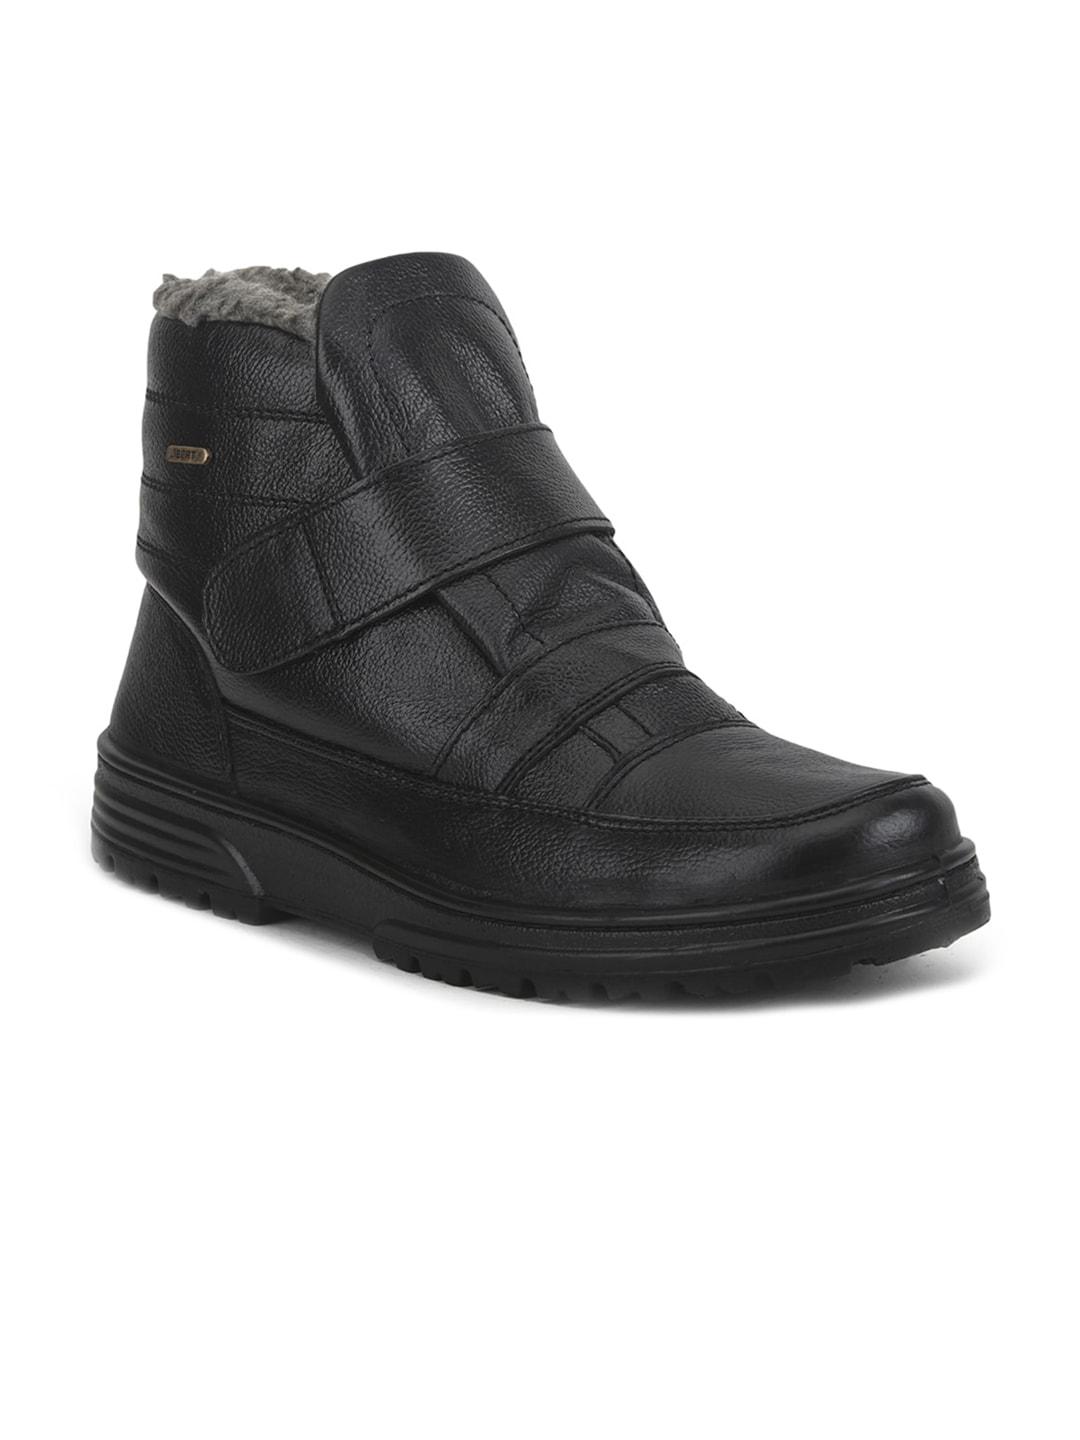 liberty-men-textured-mid-top-winter-boots